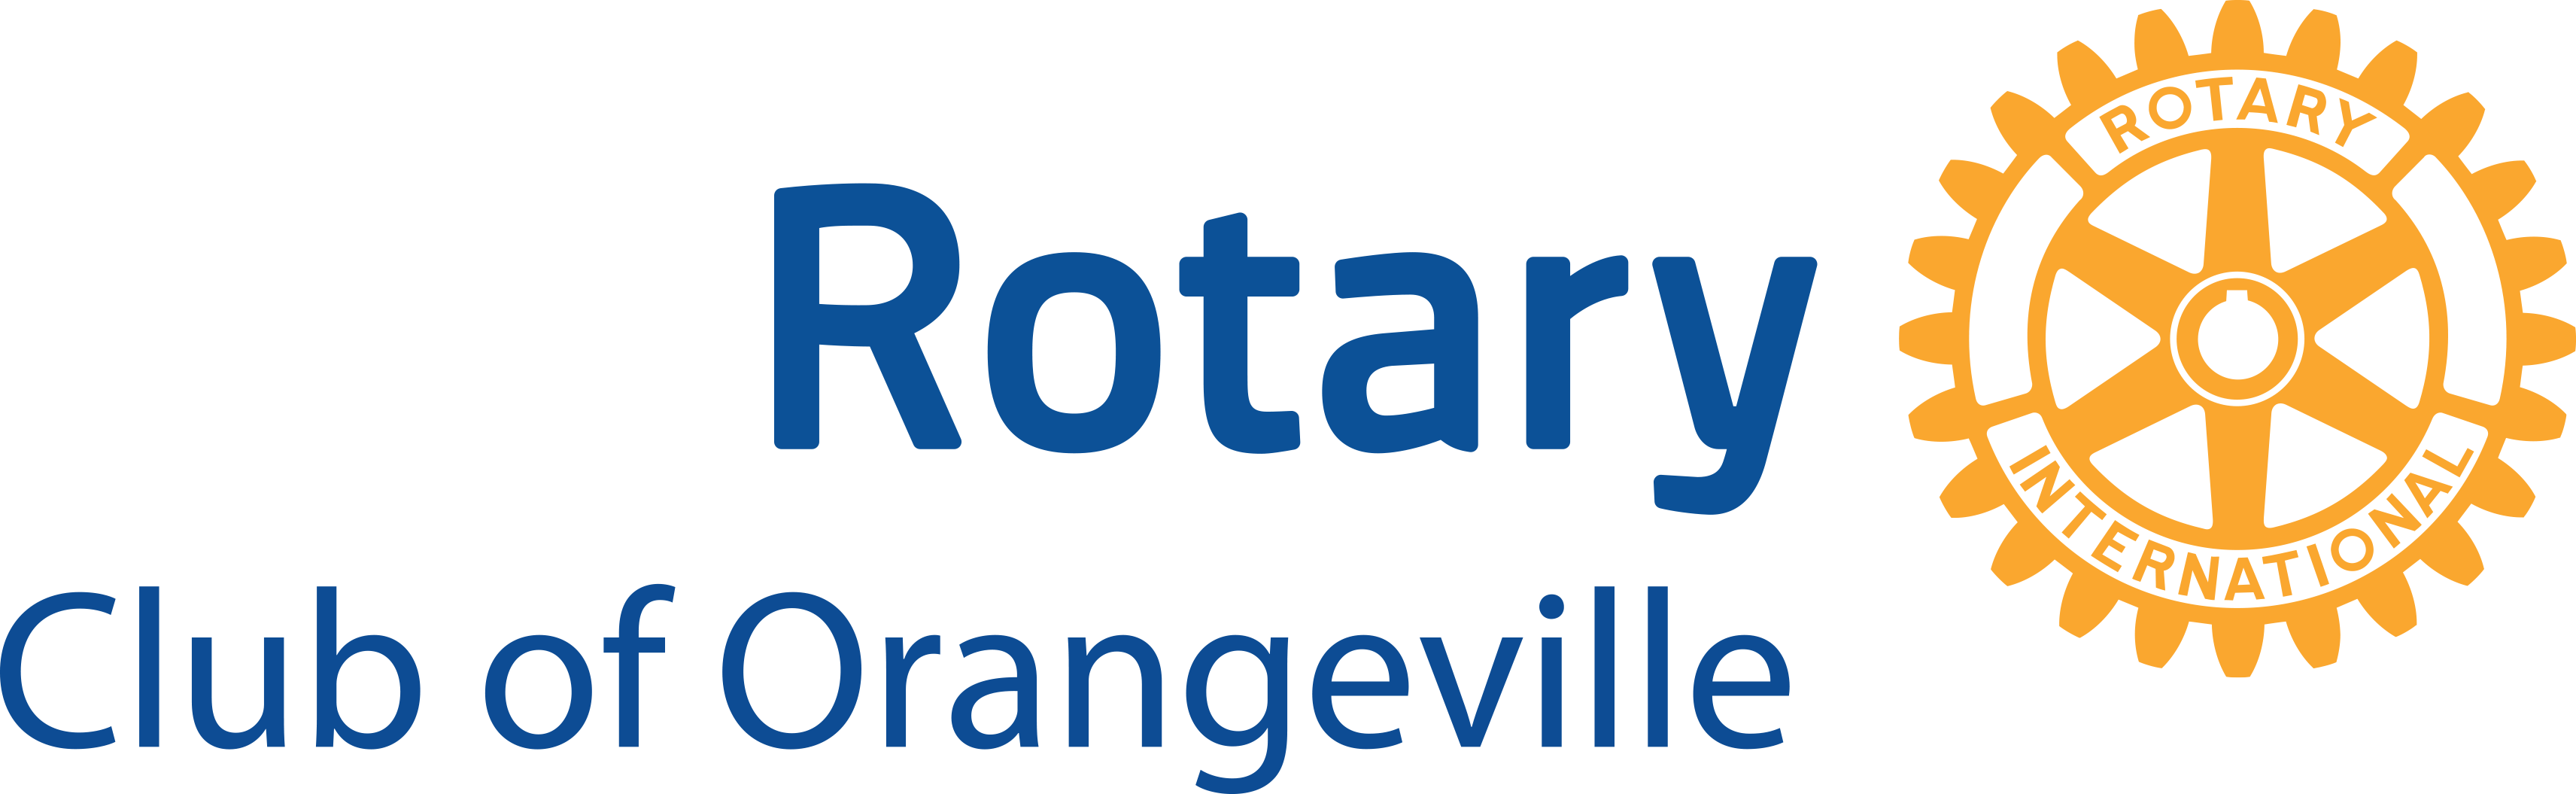 Rotary Club of Orangeville logo